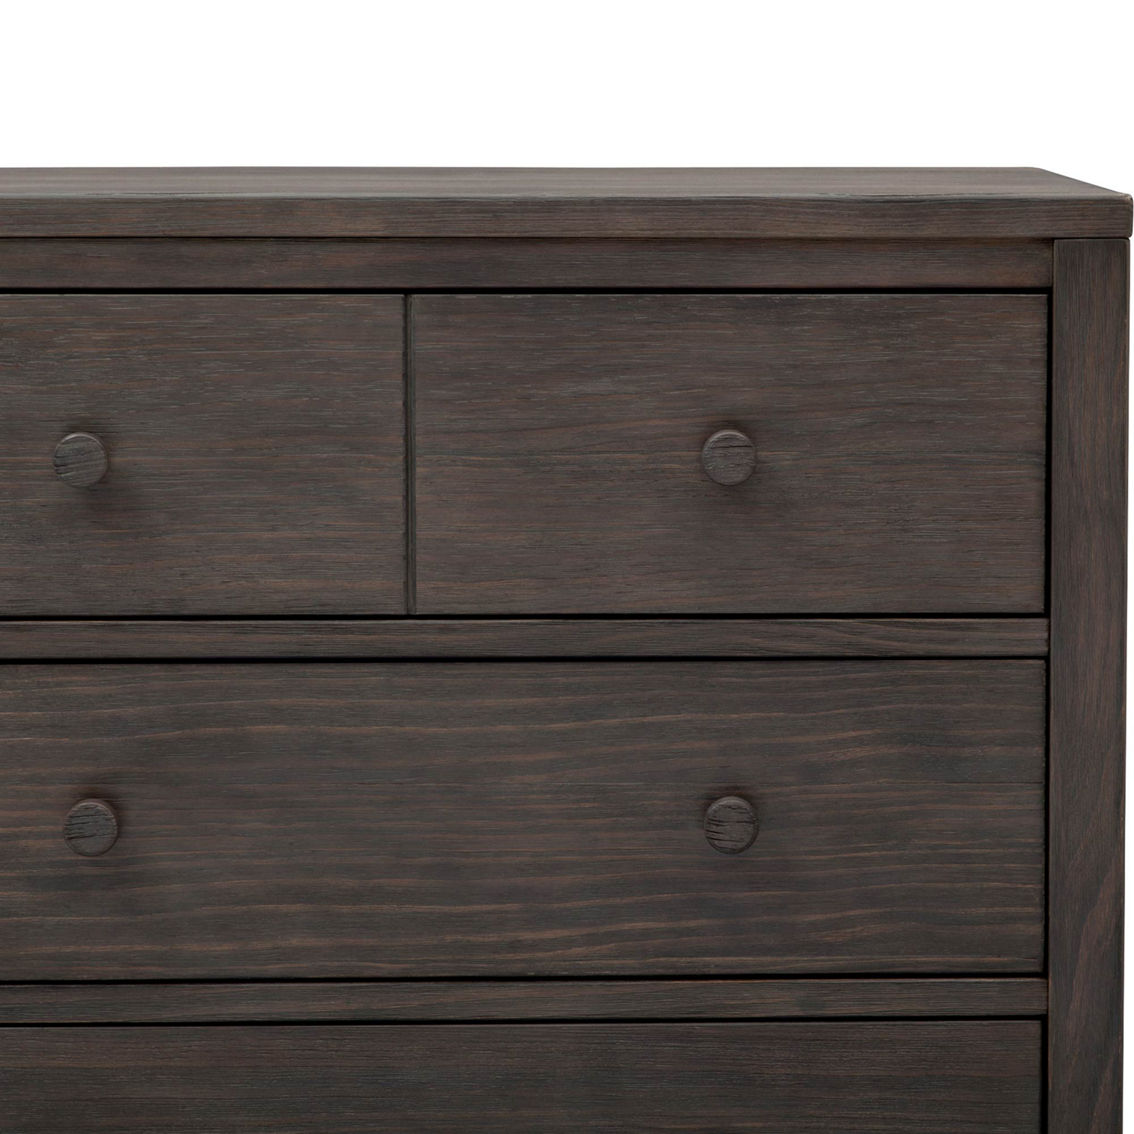 Serta Cambridge 3 Drawer Dresser - Image 4 of 4